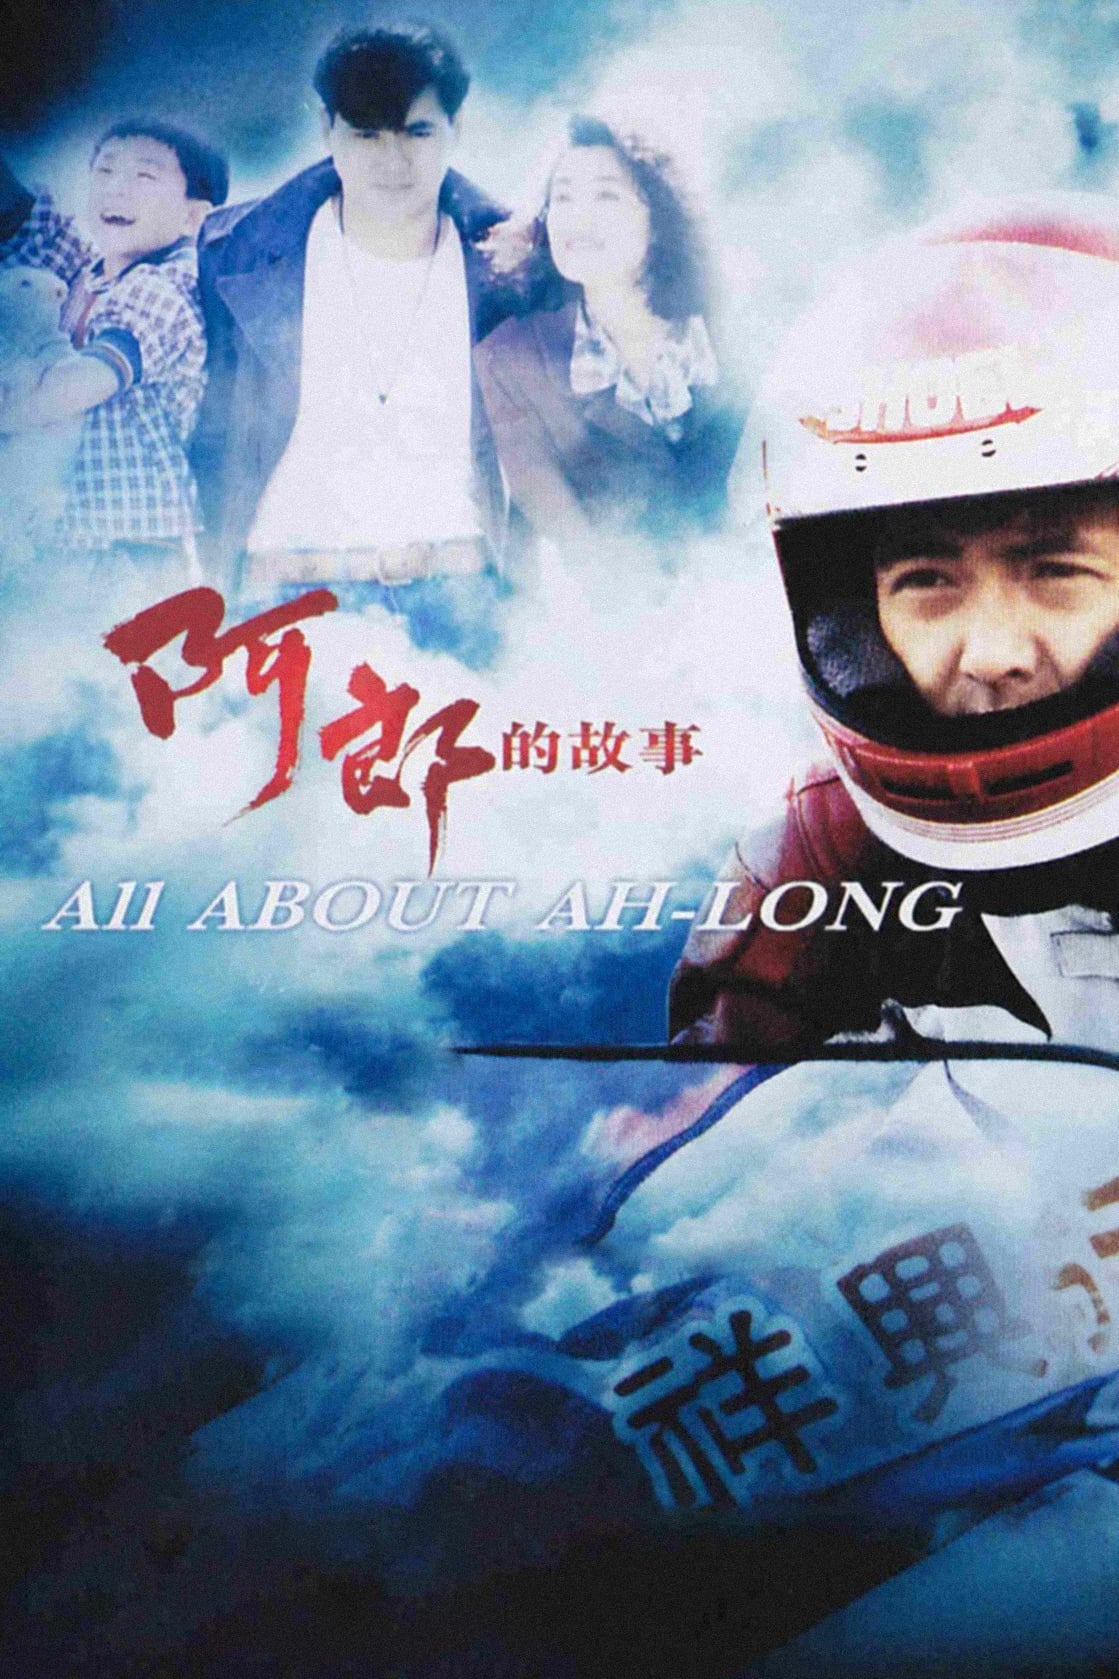 Plakat von "All About Ah-Long"